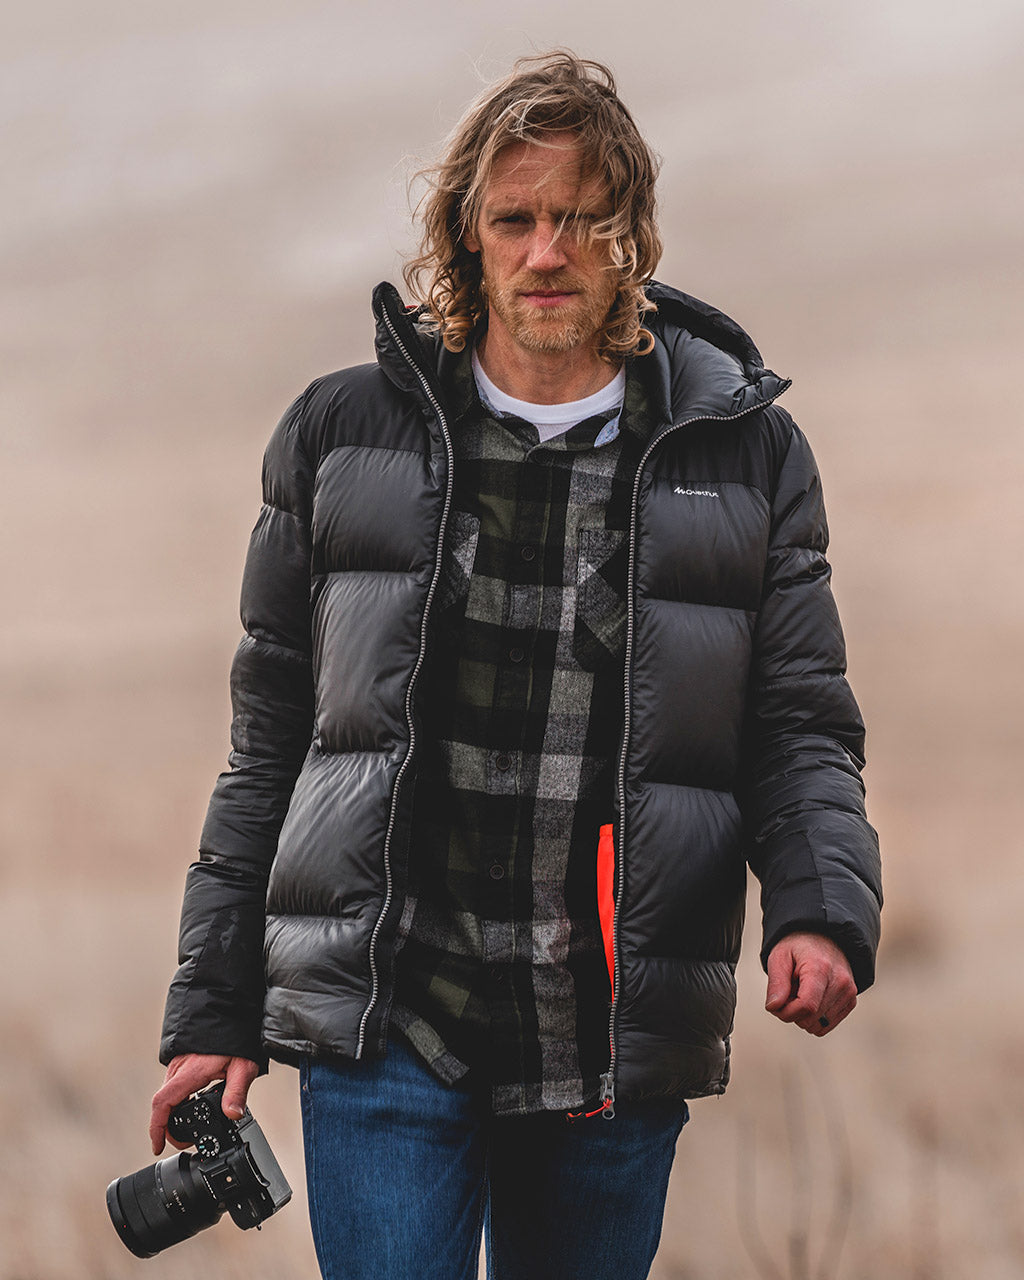 Matthew Van Horn walking on Antelope Island, Utah carrying a camera.